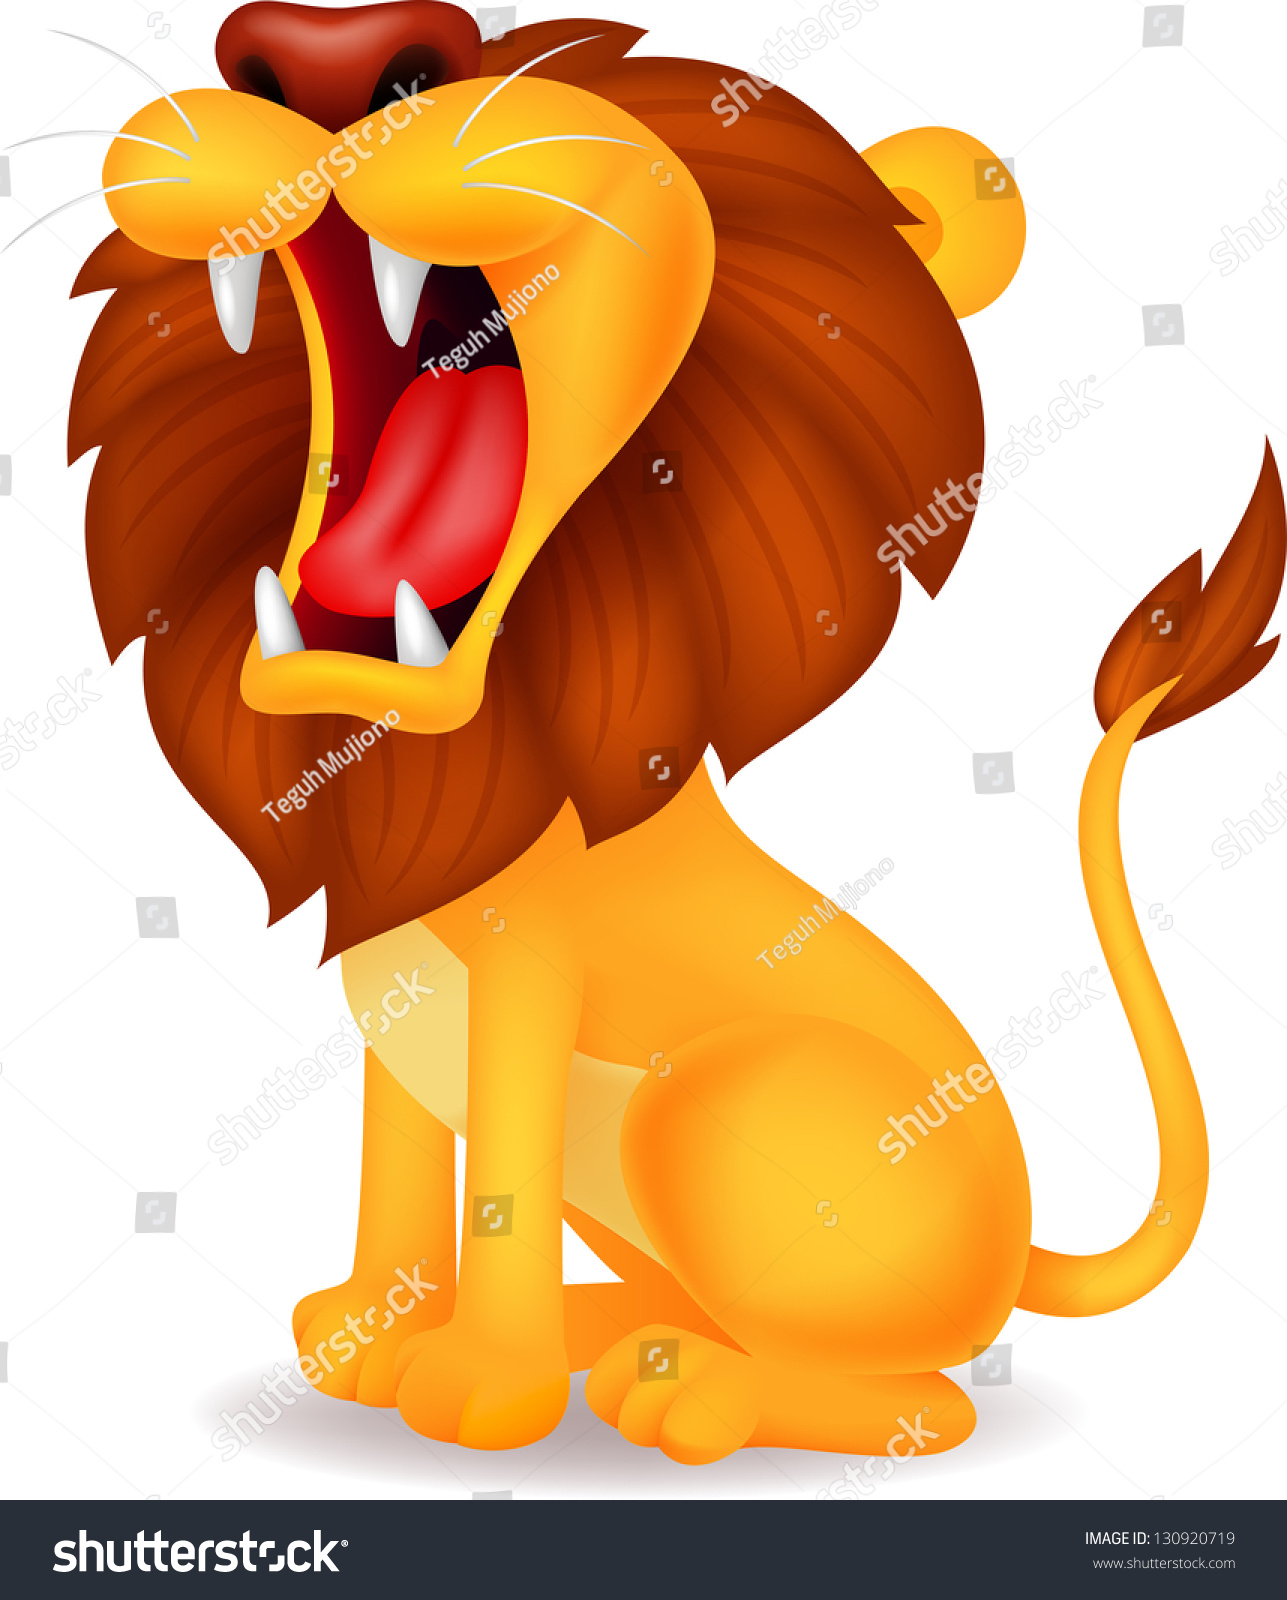 Lion Roaring Stock Vector Illustration 130920719 : Shutterstock